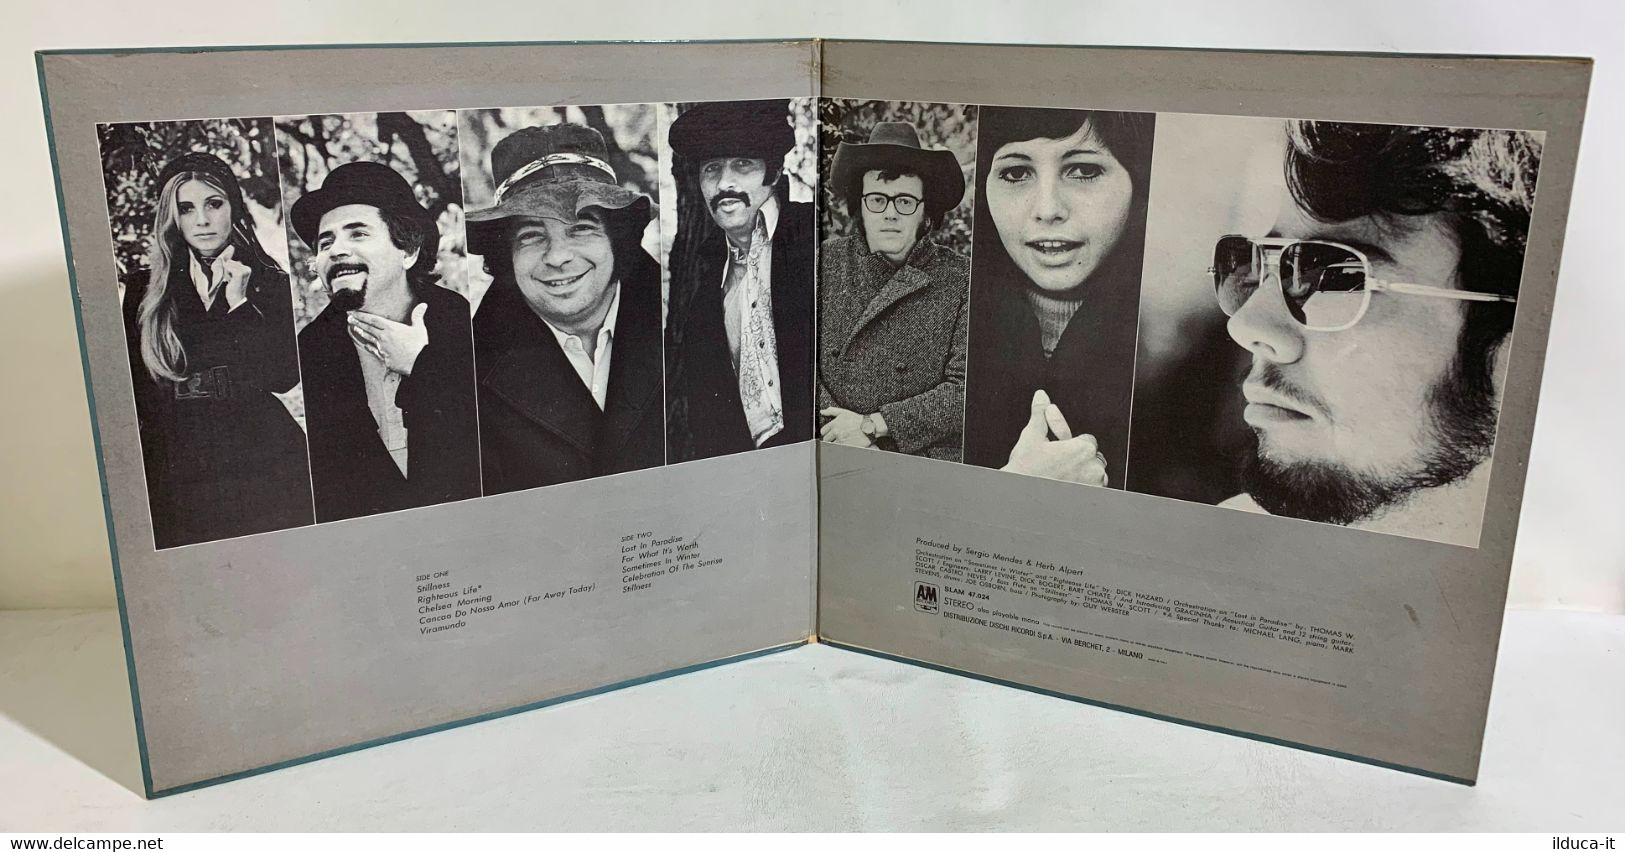 I111105 LP 33 Giri Gatefold - Sergio Mendes & Brazil '66 - Stillness - AM 1973 - Autres - Musique Espagnole